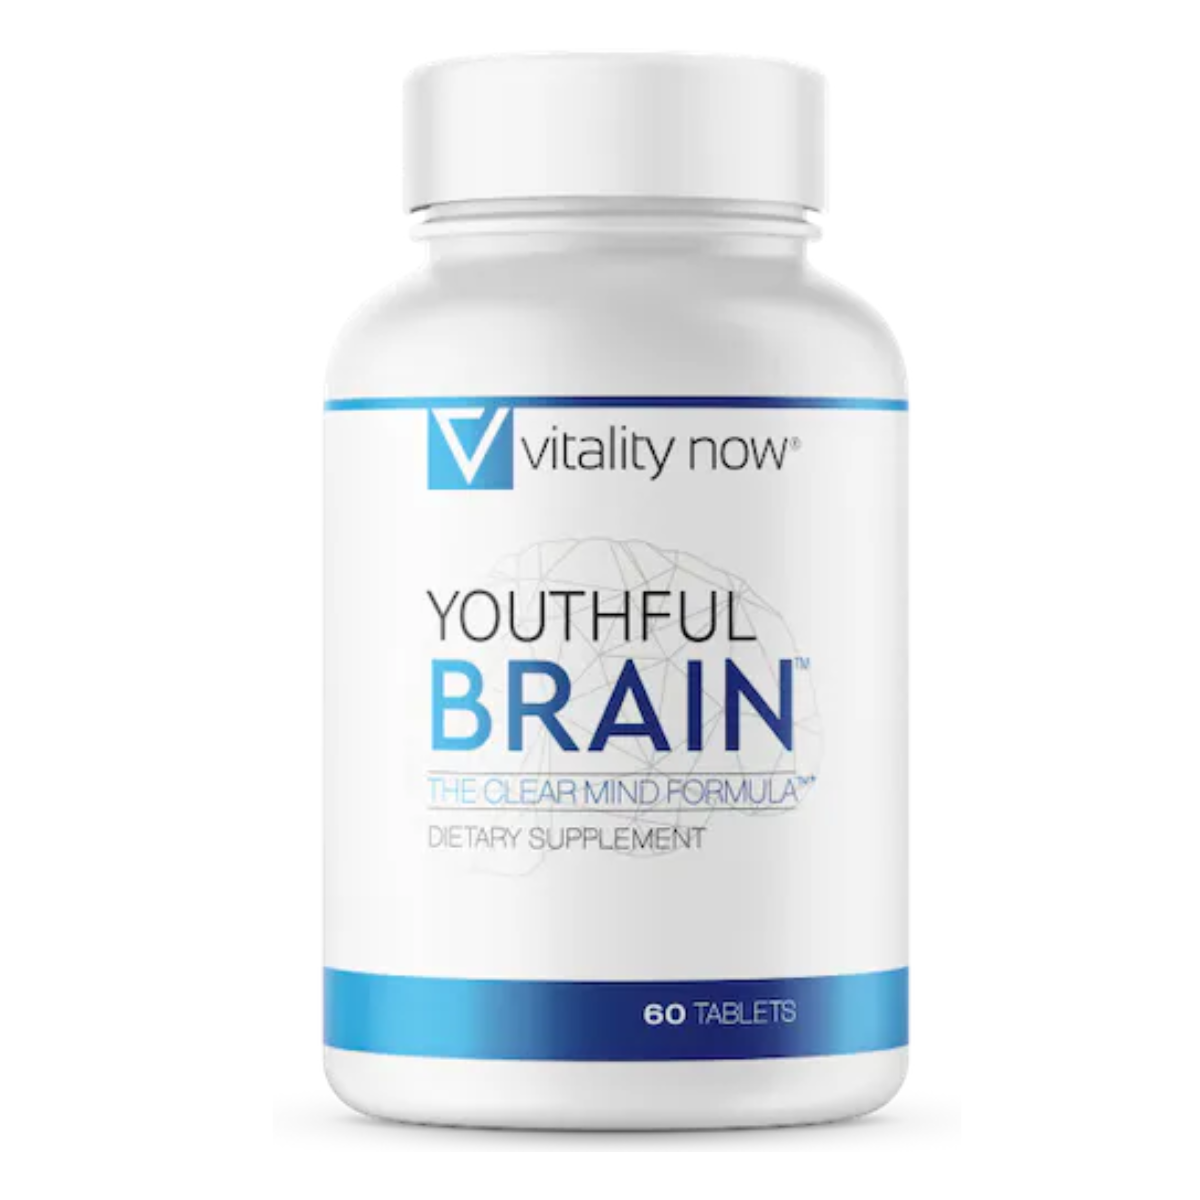 Youthful Brain - Vitality Now